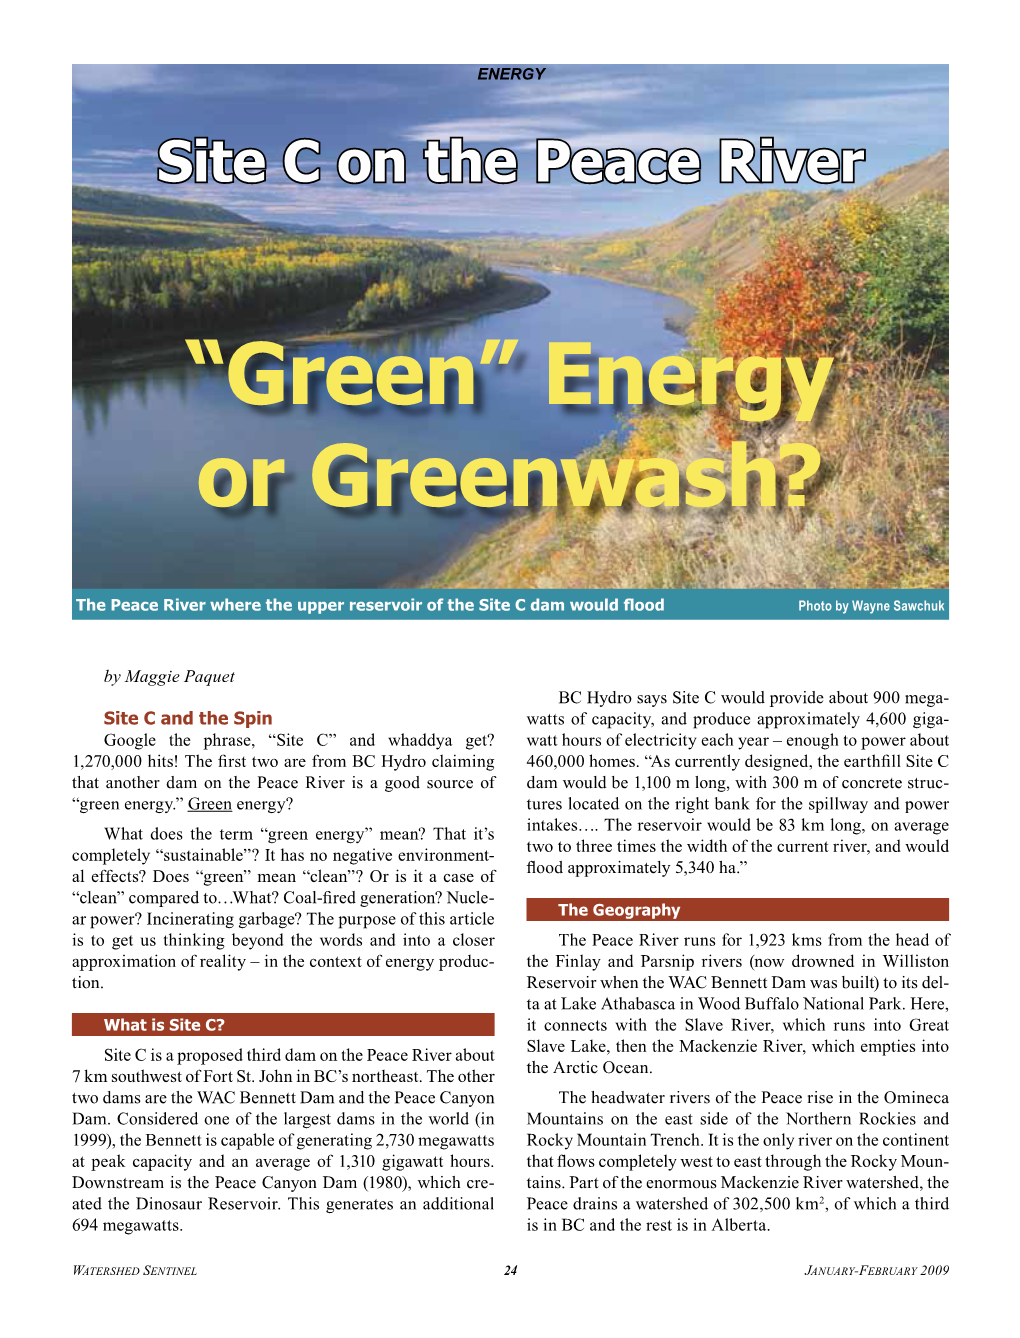 Energy Or Greenwash?